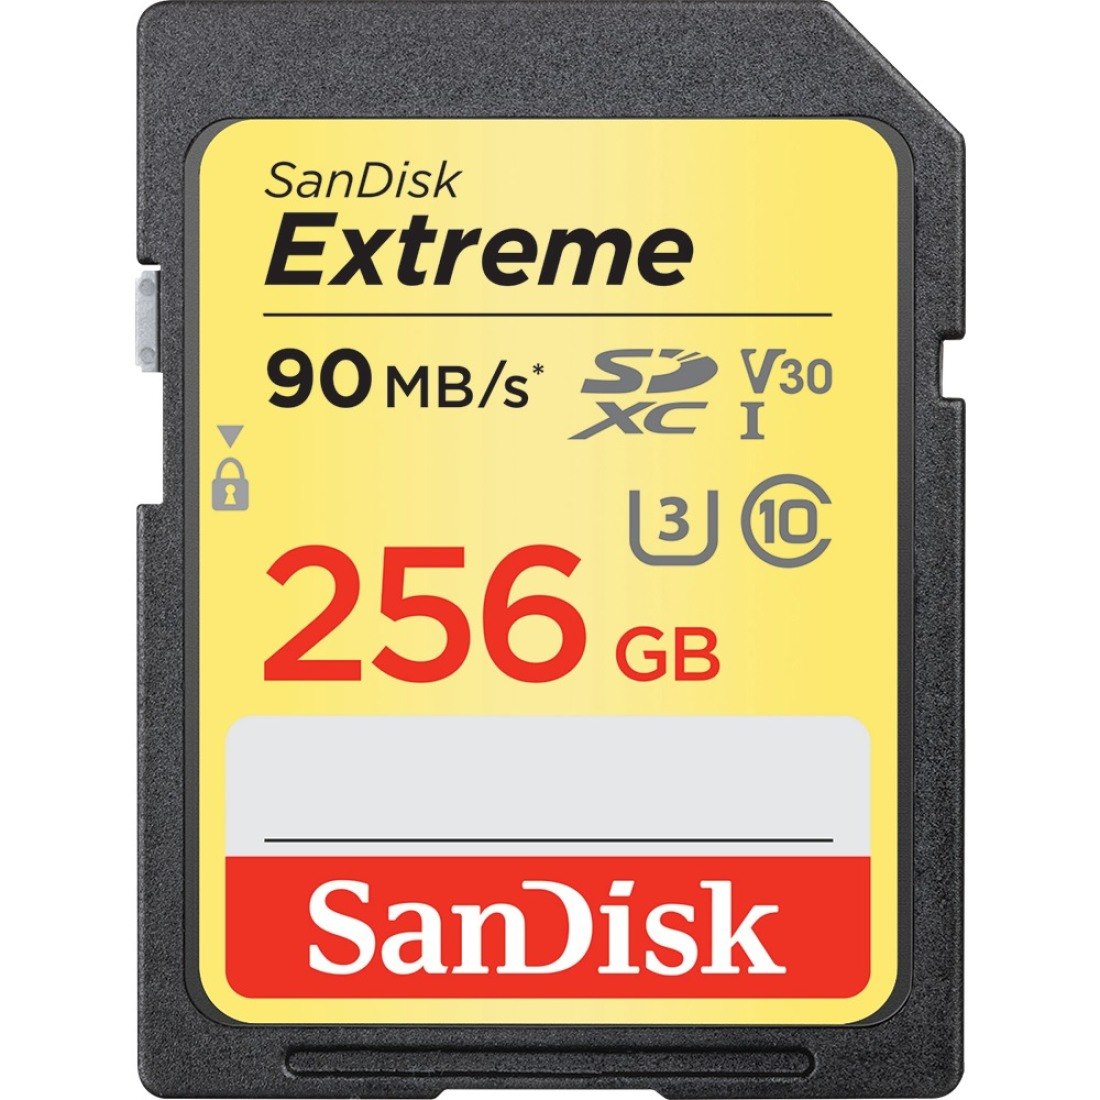 SanDisk Extreme 256 GB Class 10/UHS-I (U3) SDXC